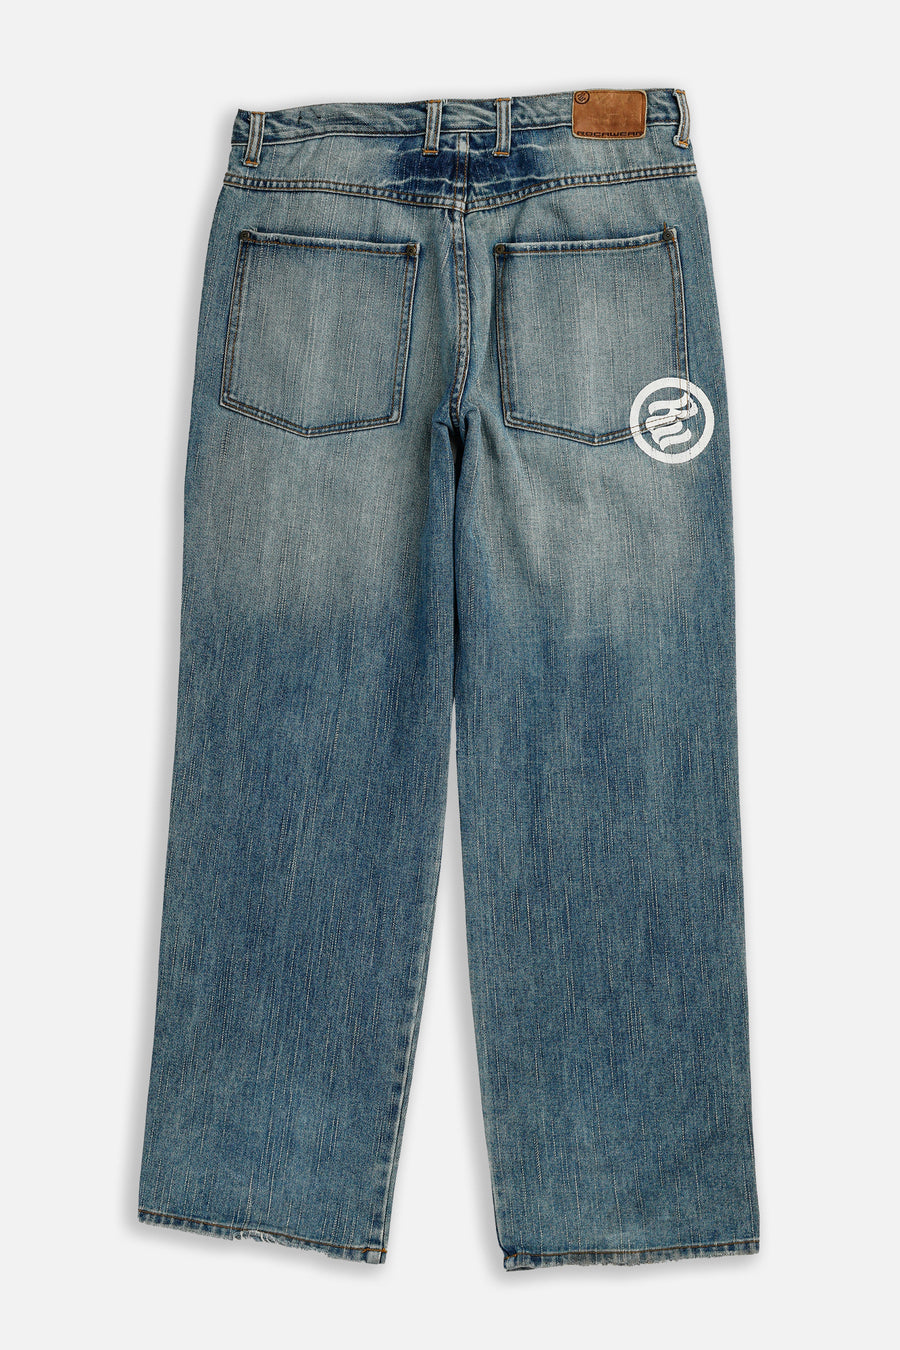 Vintage Rocawear Denim Pants - W34